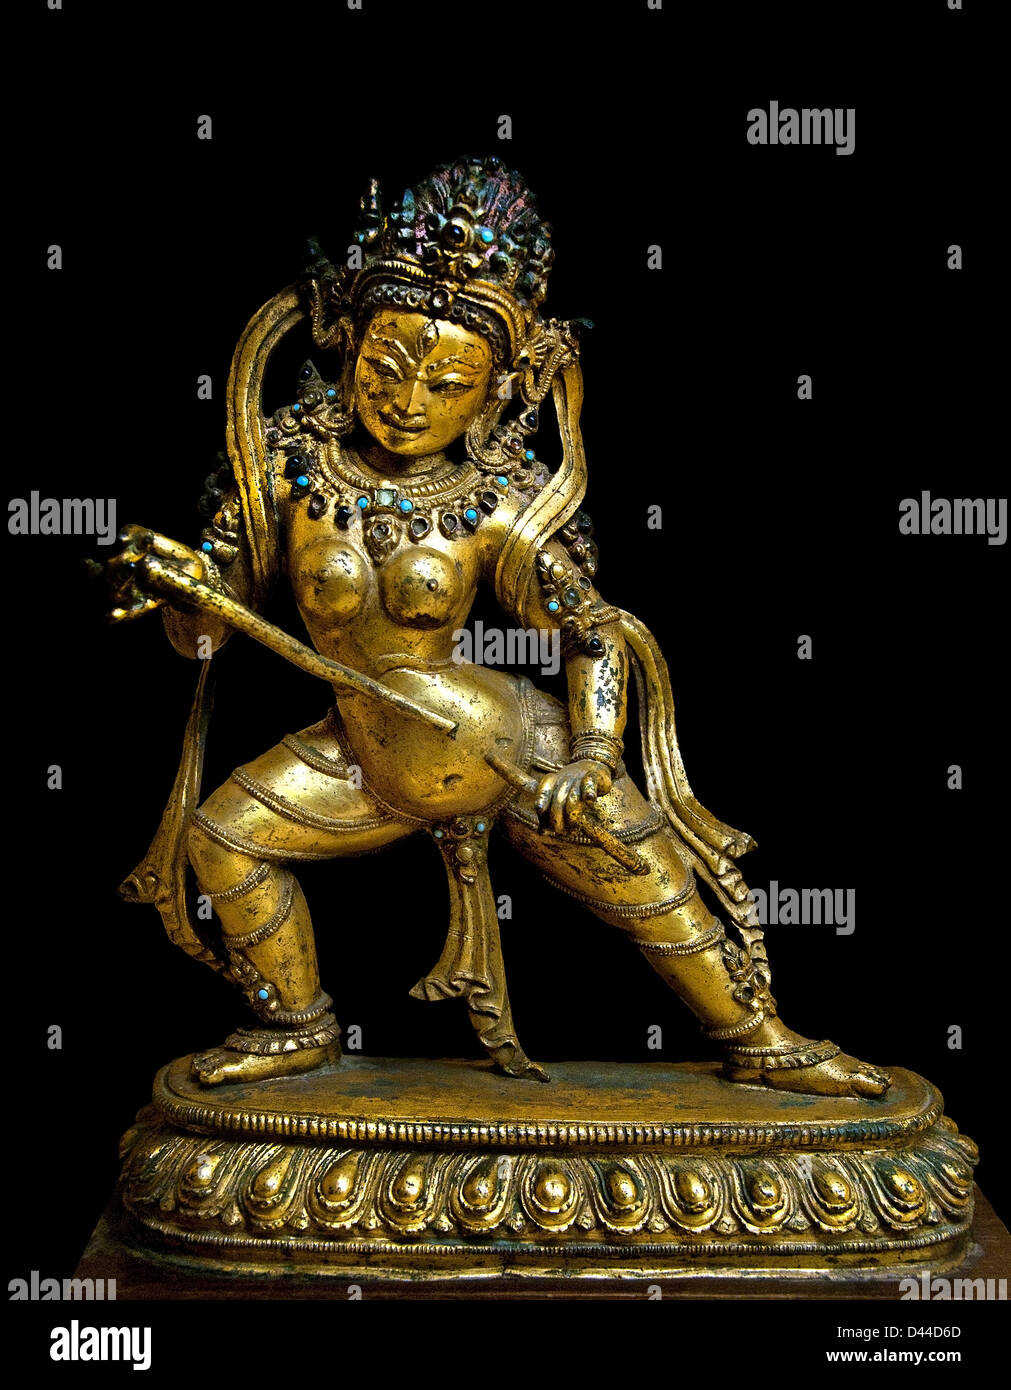 The dakini is a tantric figure representing a female embodiment of enlightened energy Tibet Tibetan 16th century Buddhism Stock Photo